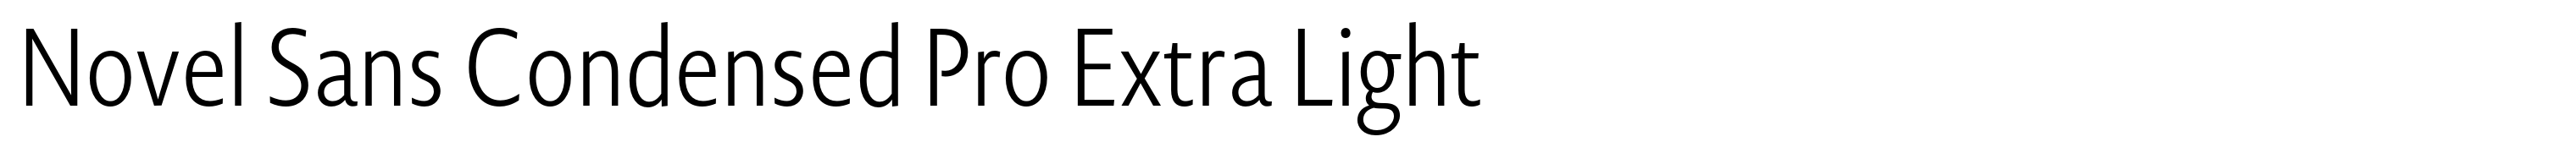 Novel Sans Condensed Pro Extra Light